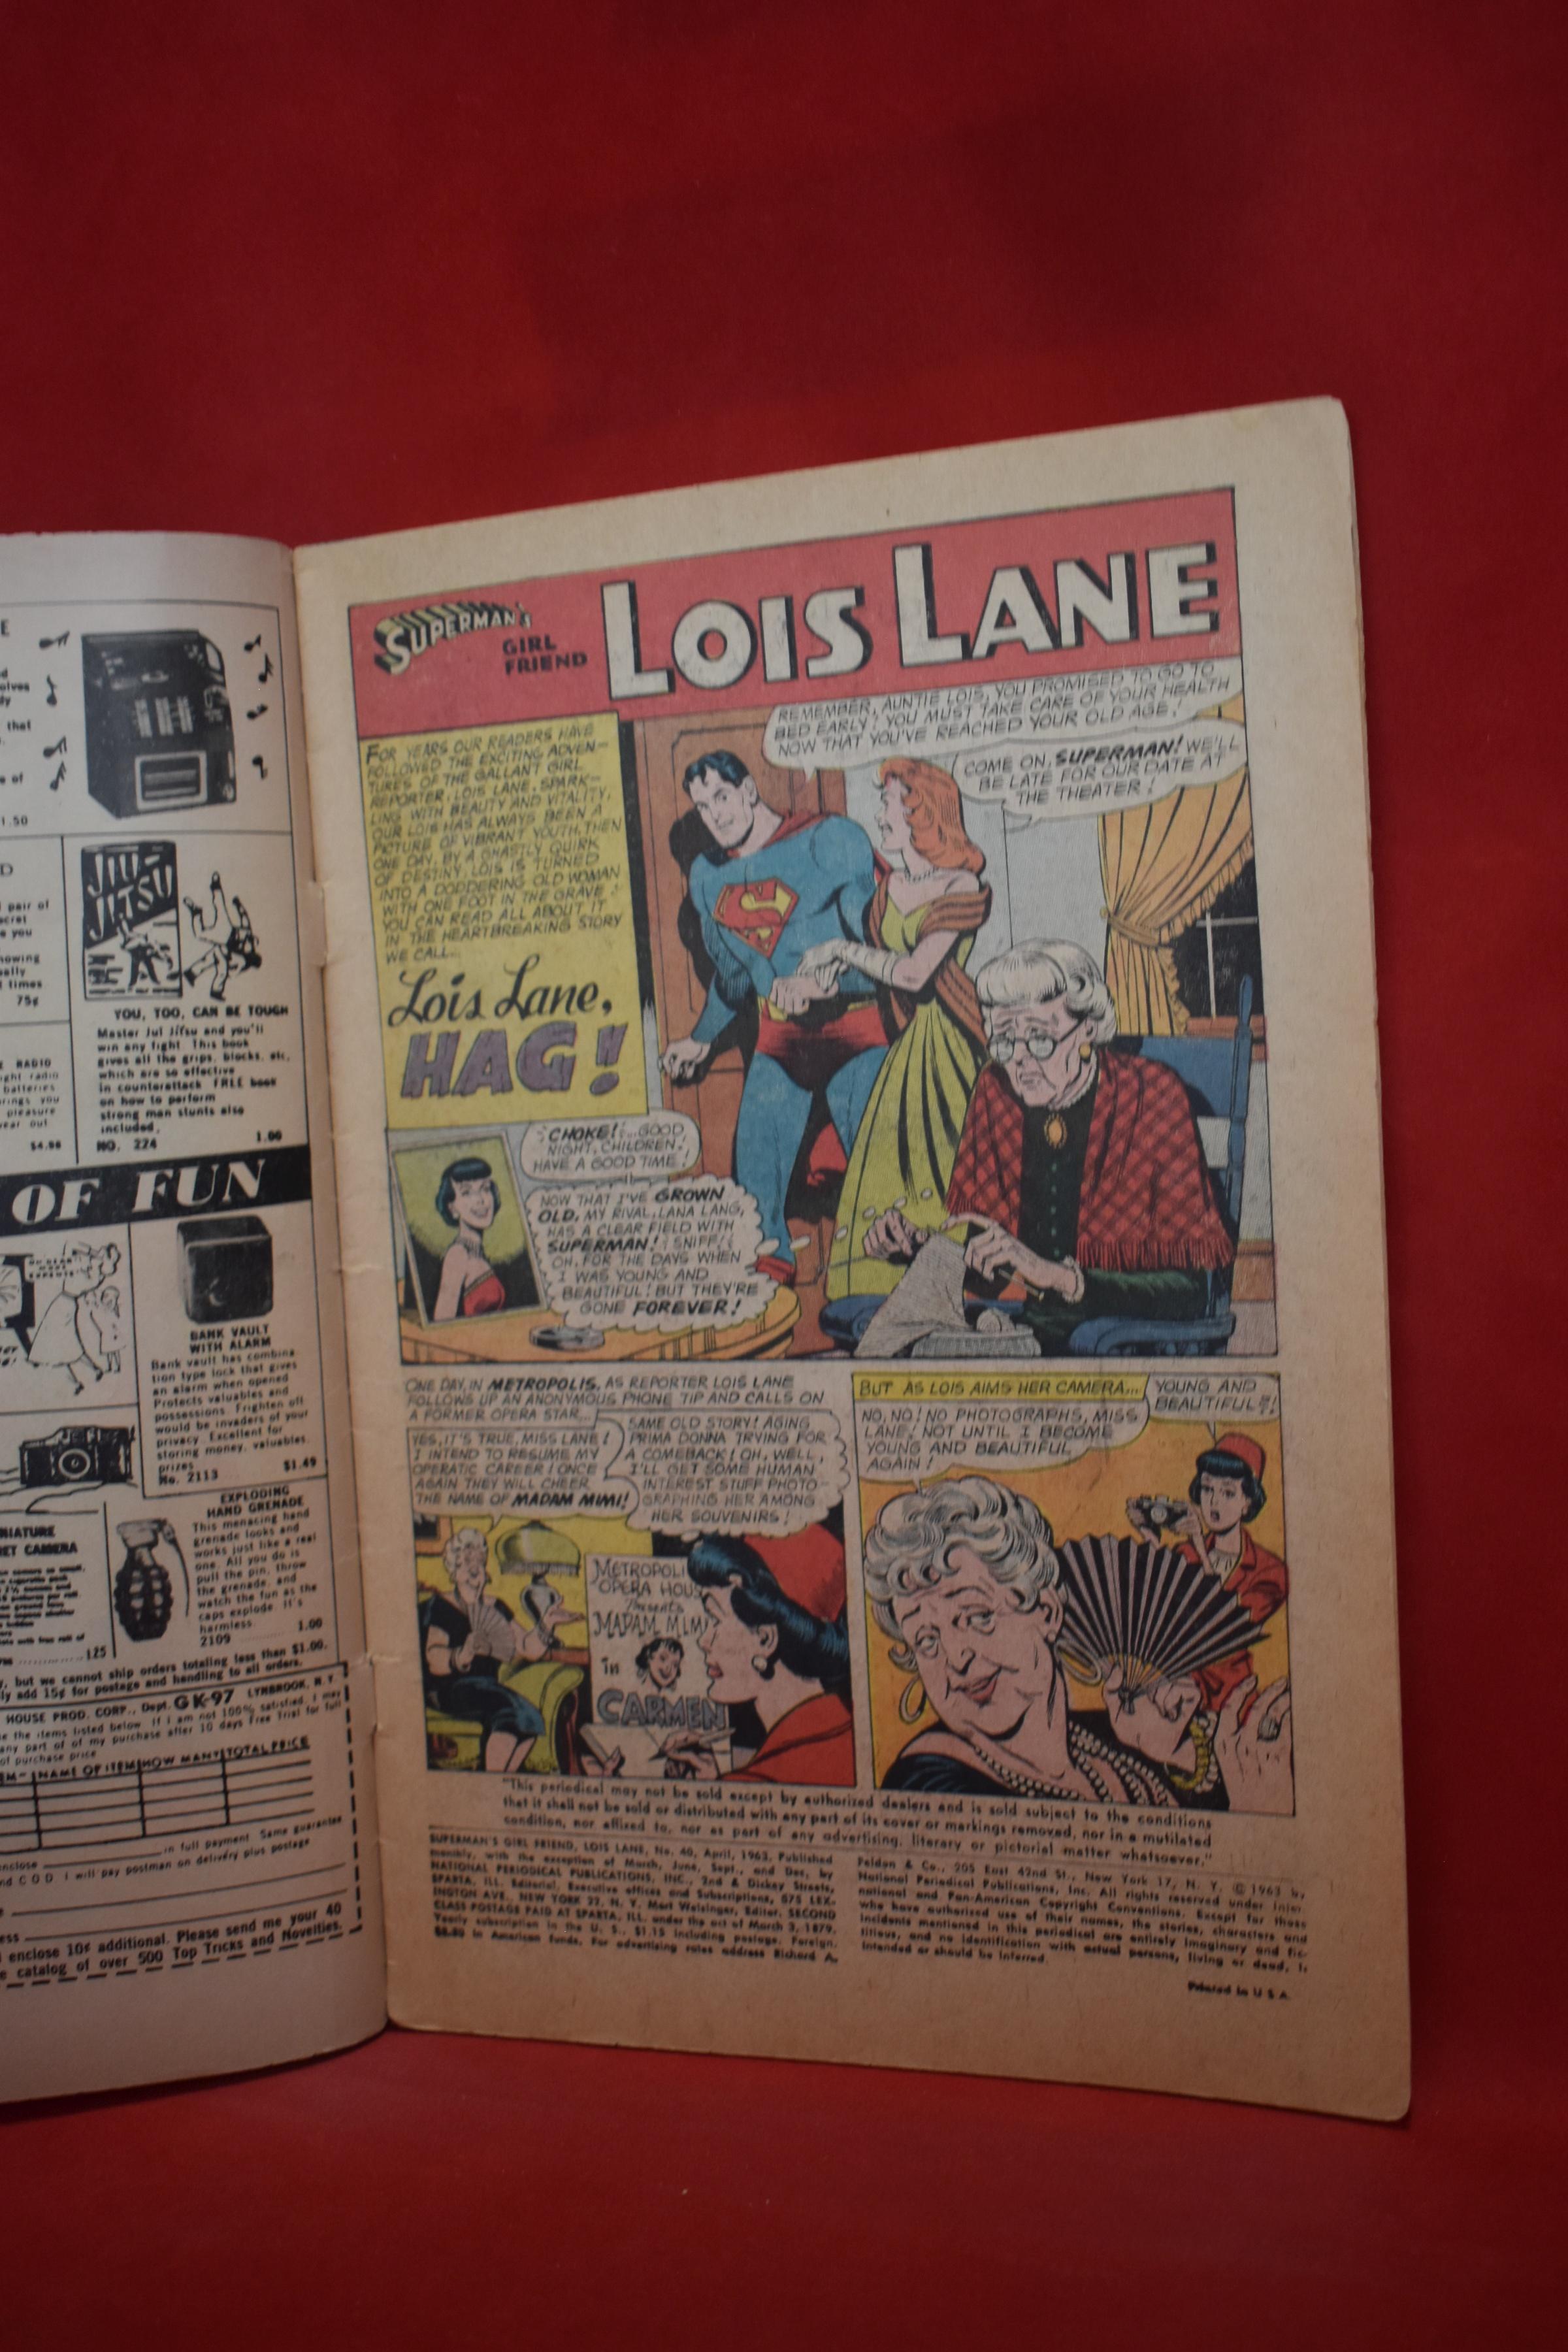 LOIS LANE #40 | LOIS LANE - HAG! | SCHAFFENBERGER - 1963 | *COMPLETE - SEE PICS*